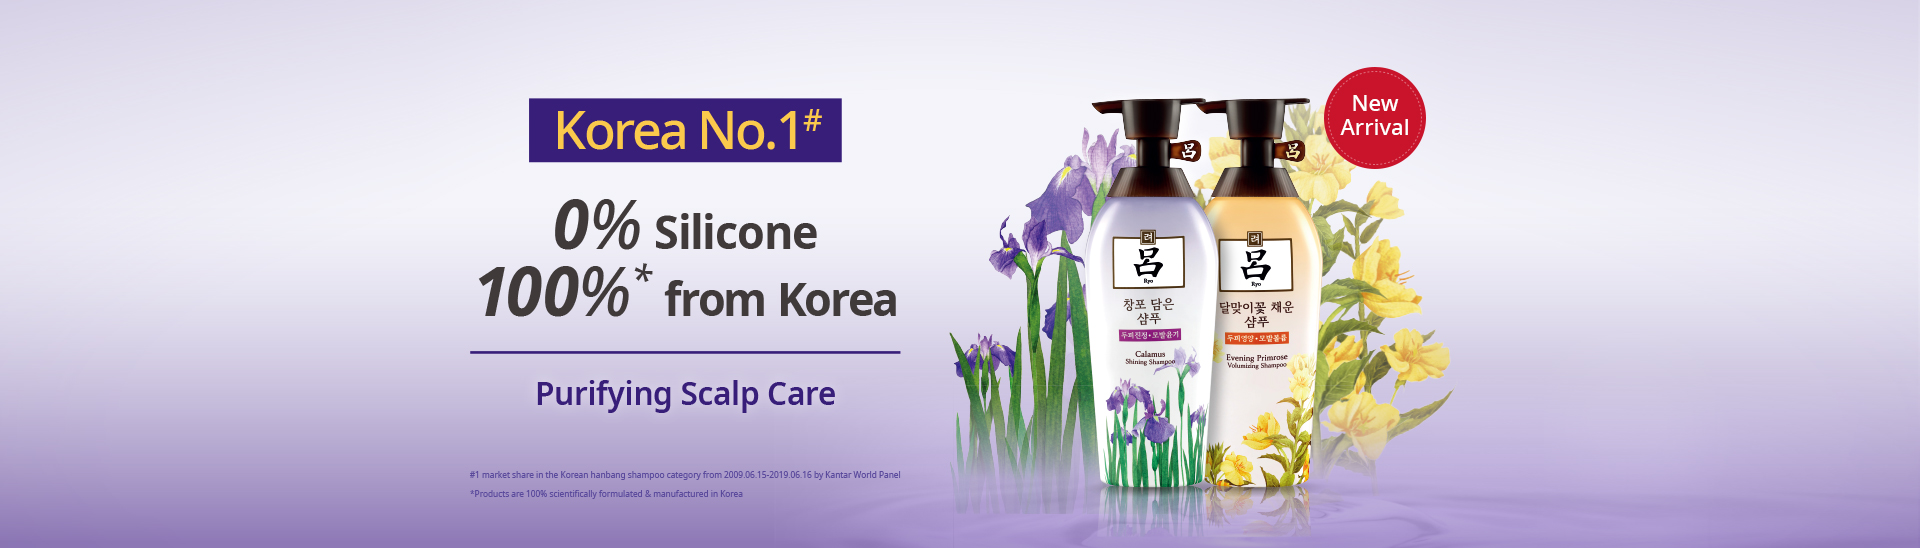 Korea No.1 0% Silicone 100% from Korea Purifying Scalp Care